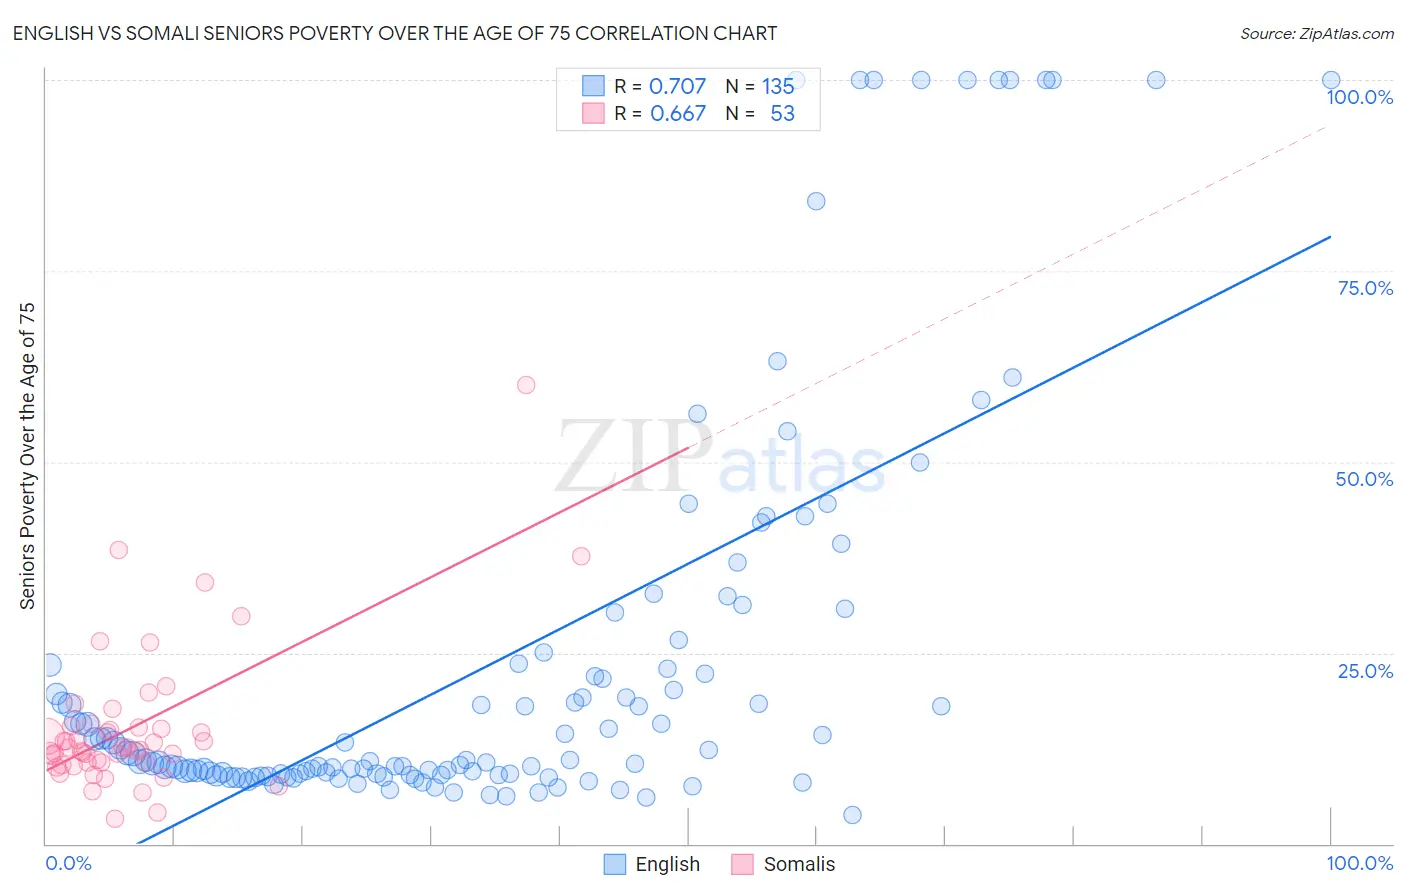 English vs Somali Seniors Poverty Over the Age of 75